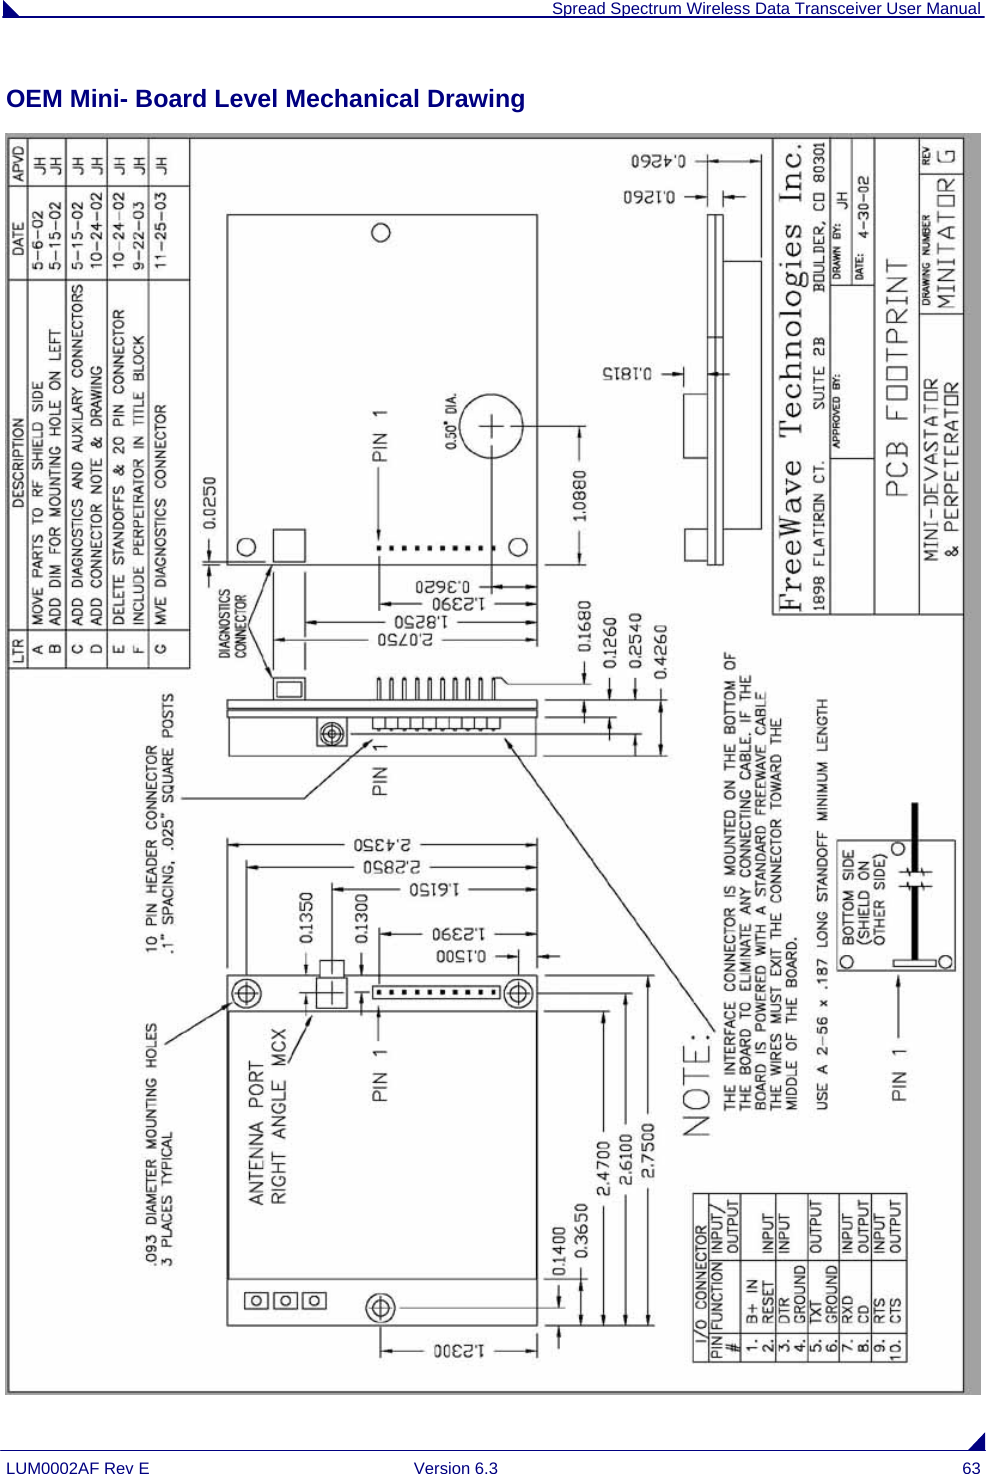  Spread Spectrum Wireless Data Transceiver User Manual LUM0002AF Rev E  Version 6.3  63 OEM Mini- Board Level Mechanical Drawing  